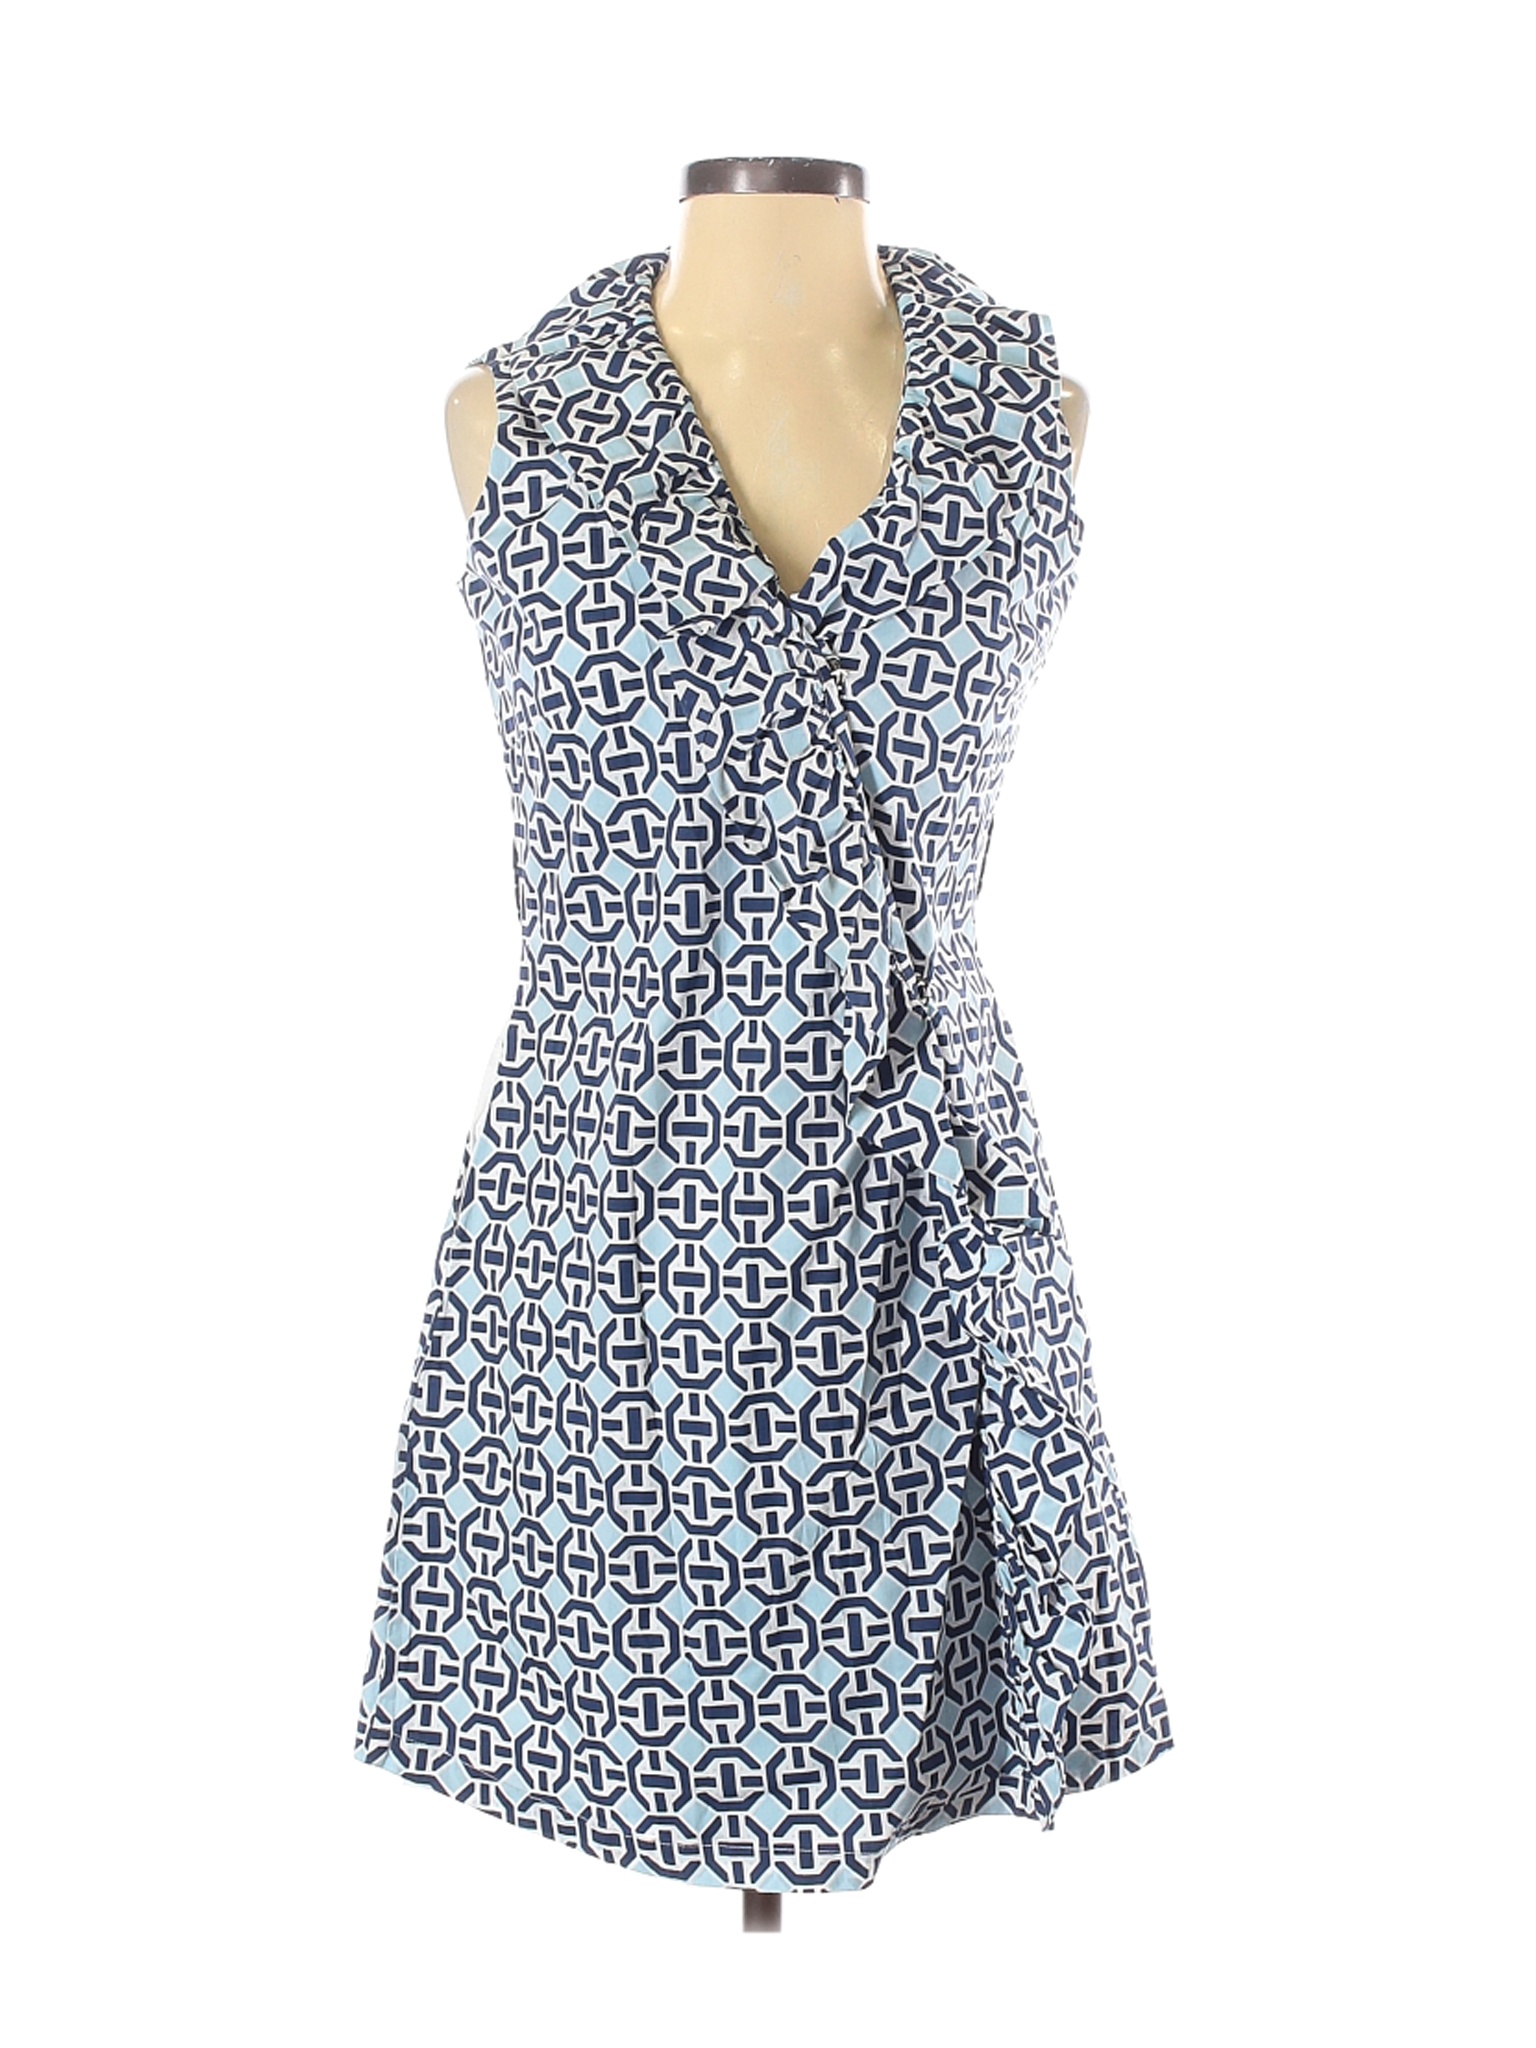 Dizzy Lizzy Women Blue Casual Dress S | eBay